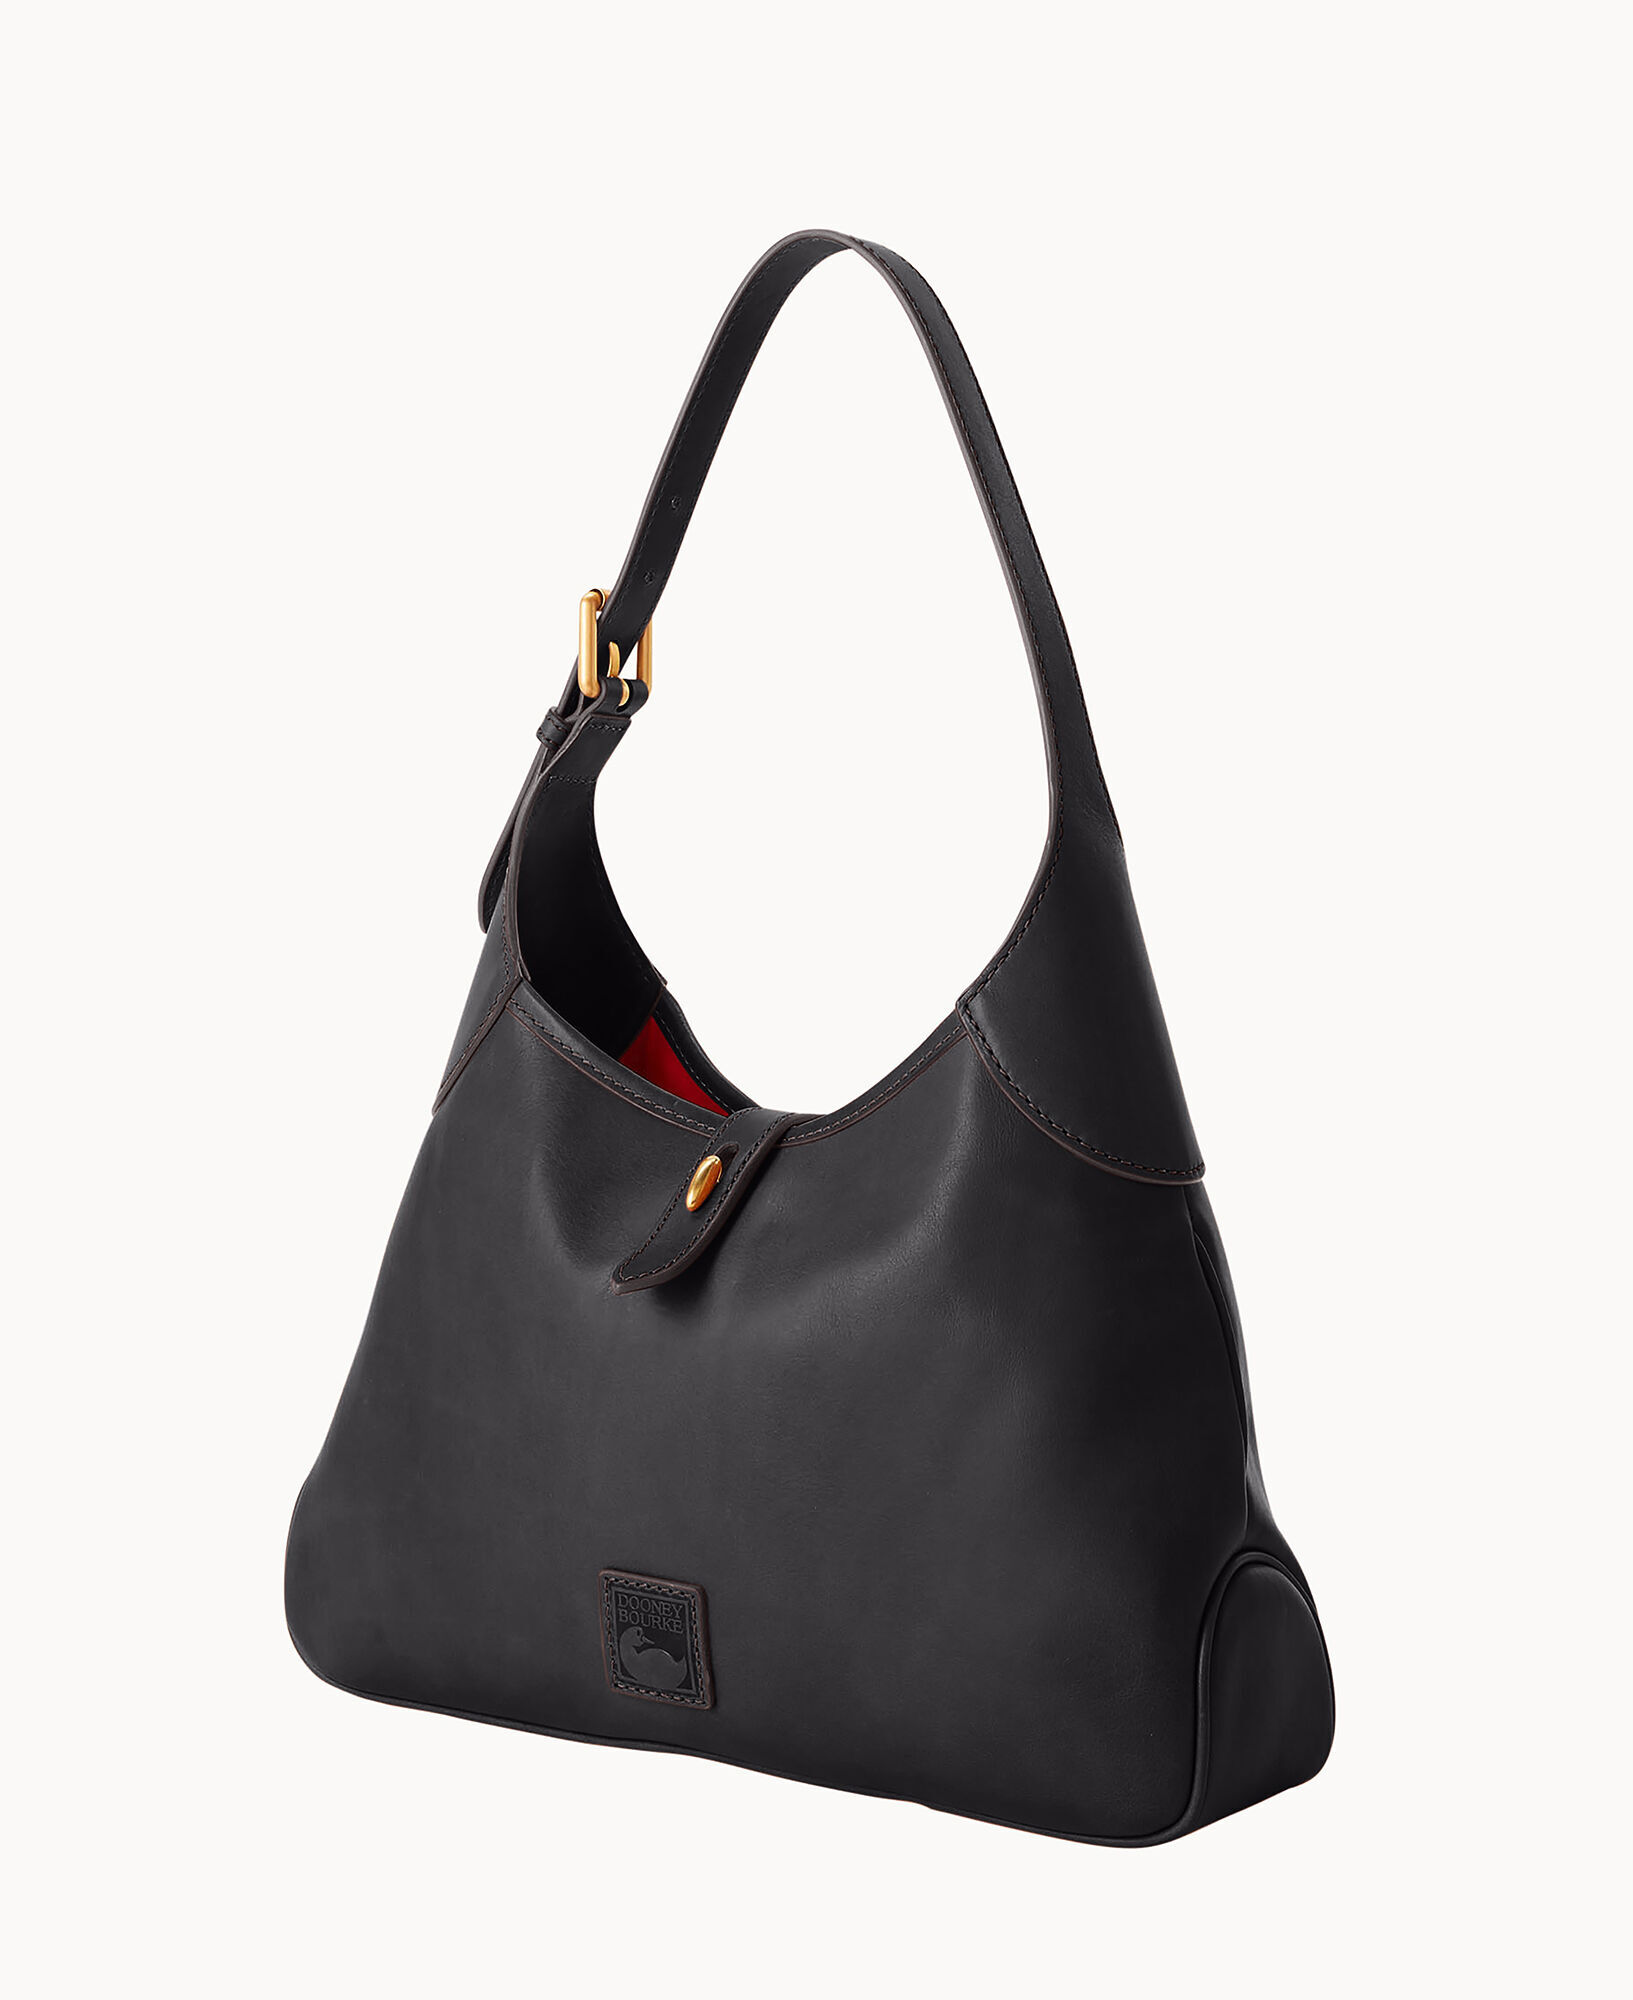 Dooney & Bourke Black Crossbody Bag One Size - 67% off